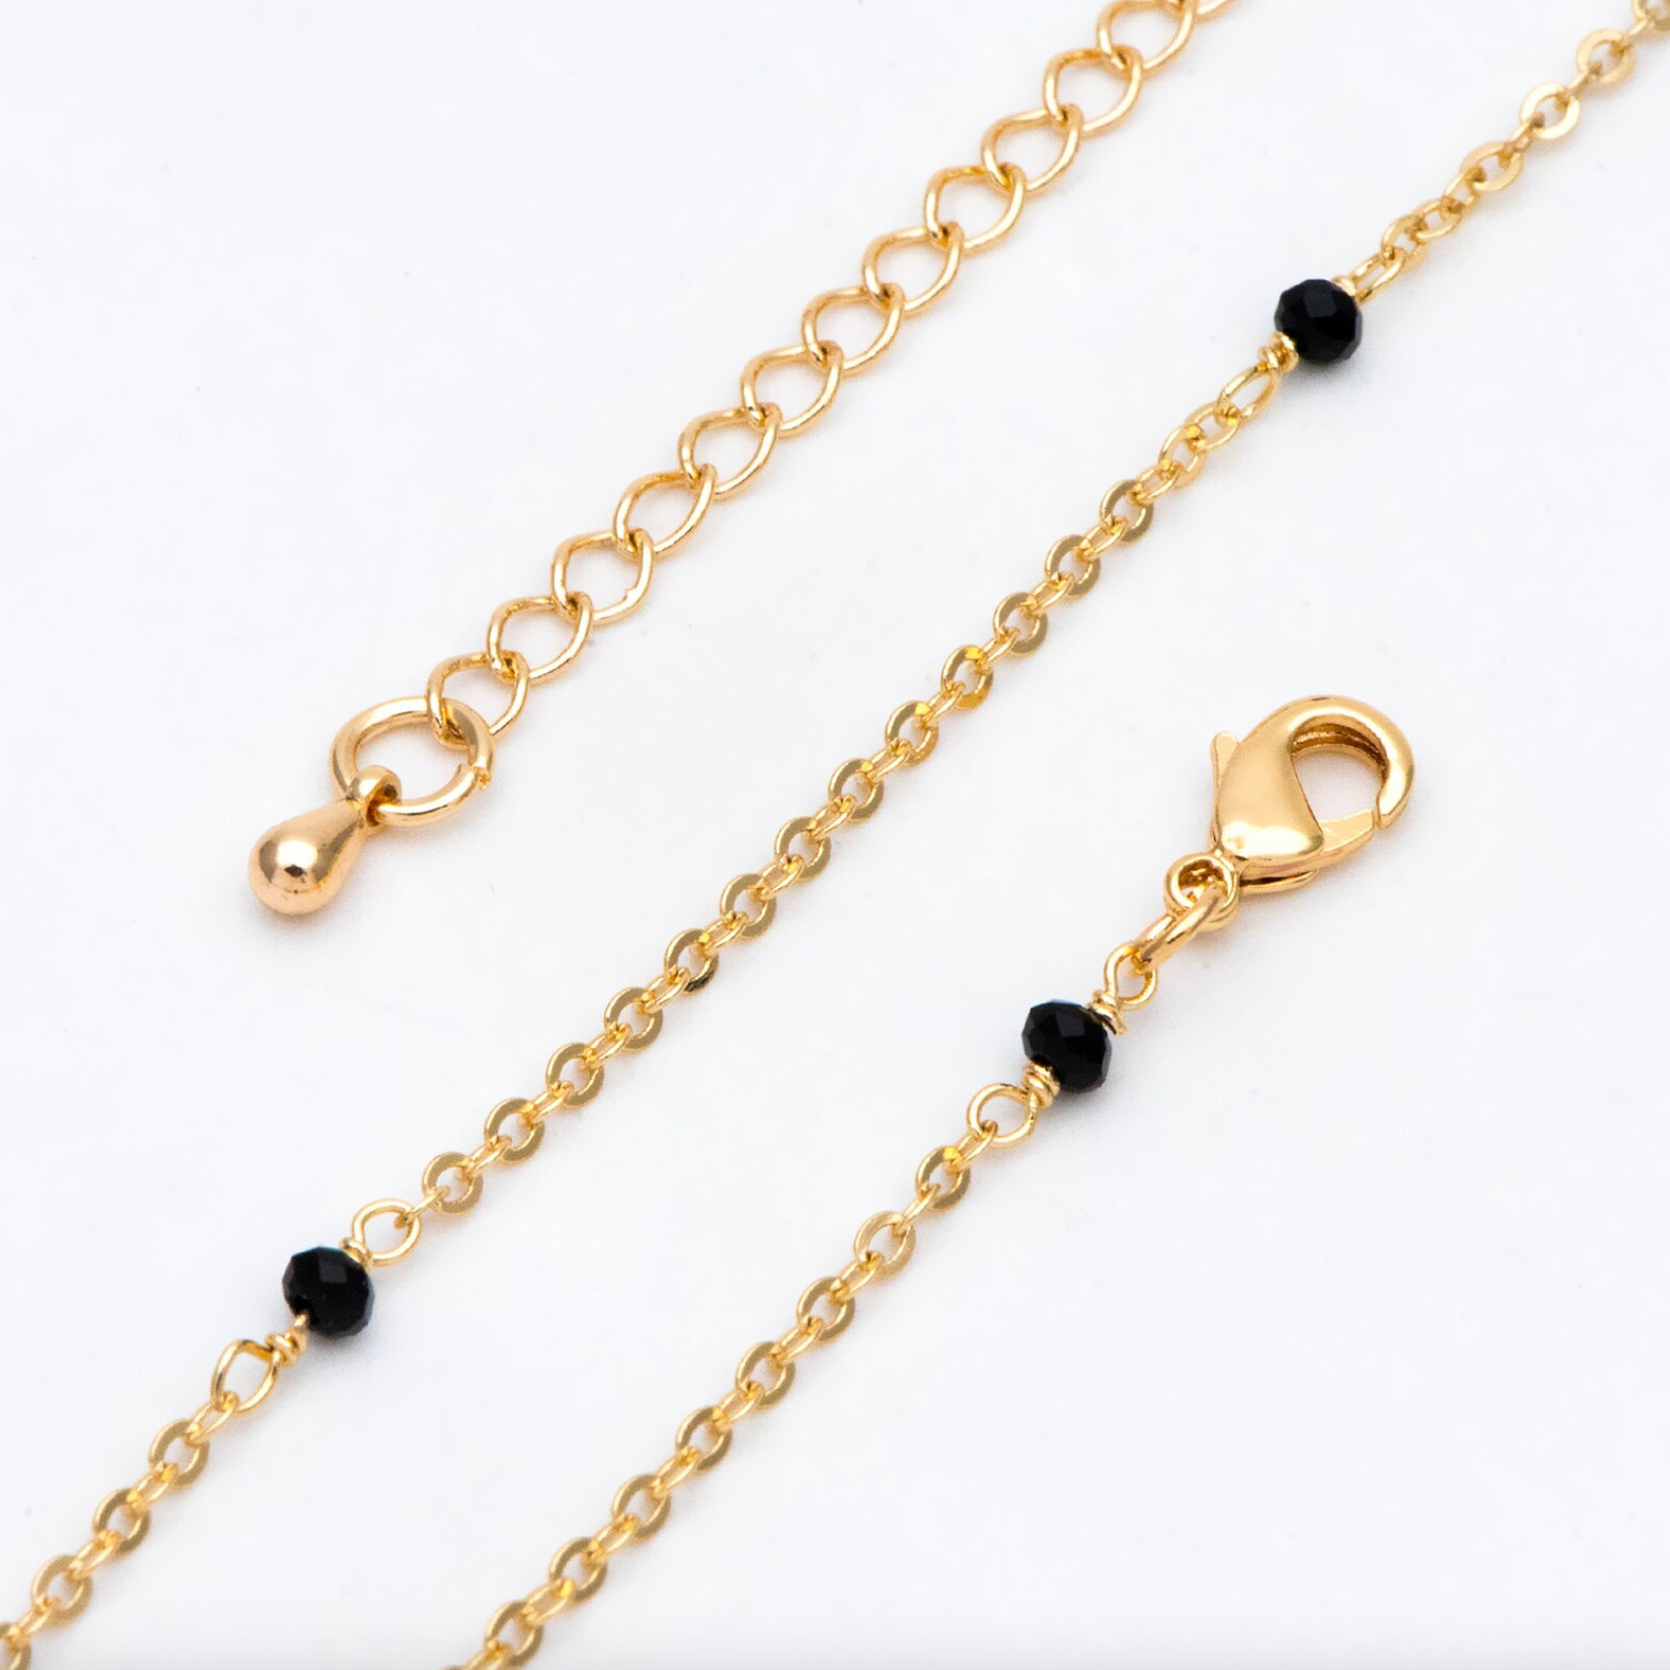 Black Crystal Bead Necklace.